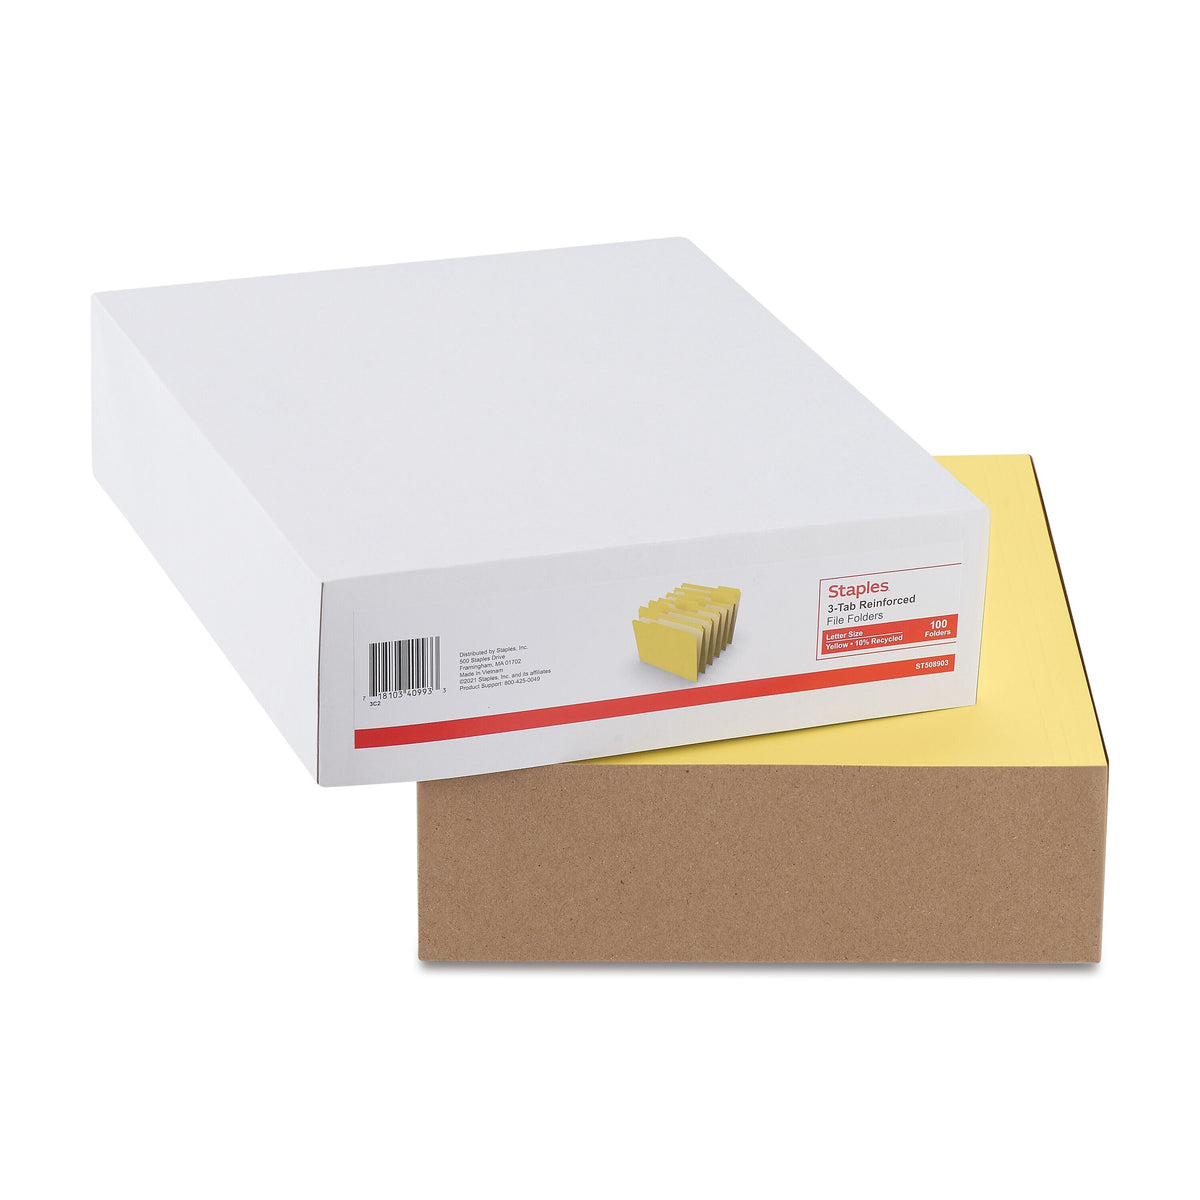 Staples Reinforced File Folders, 1/3-Cut Tab, Letter Size, Yellow, 100/Box